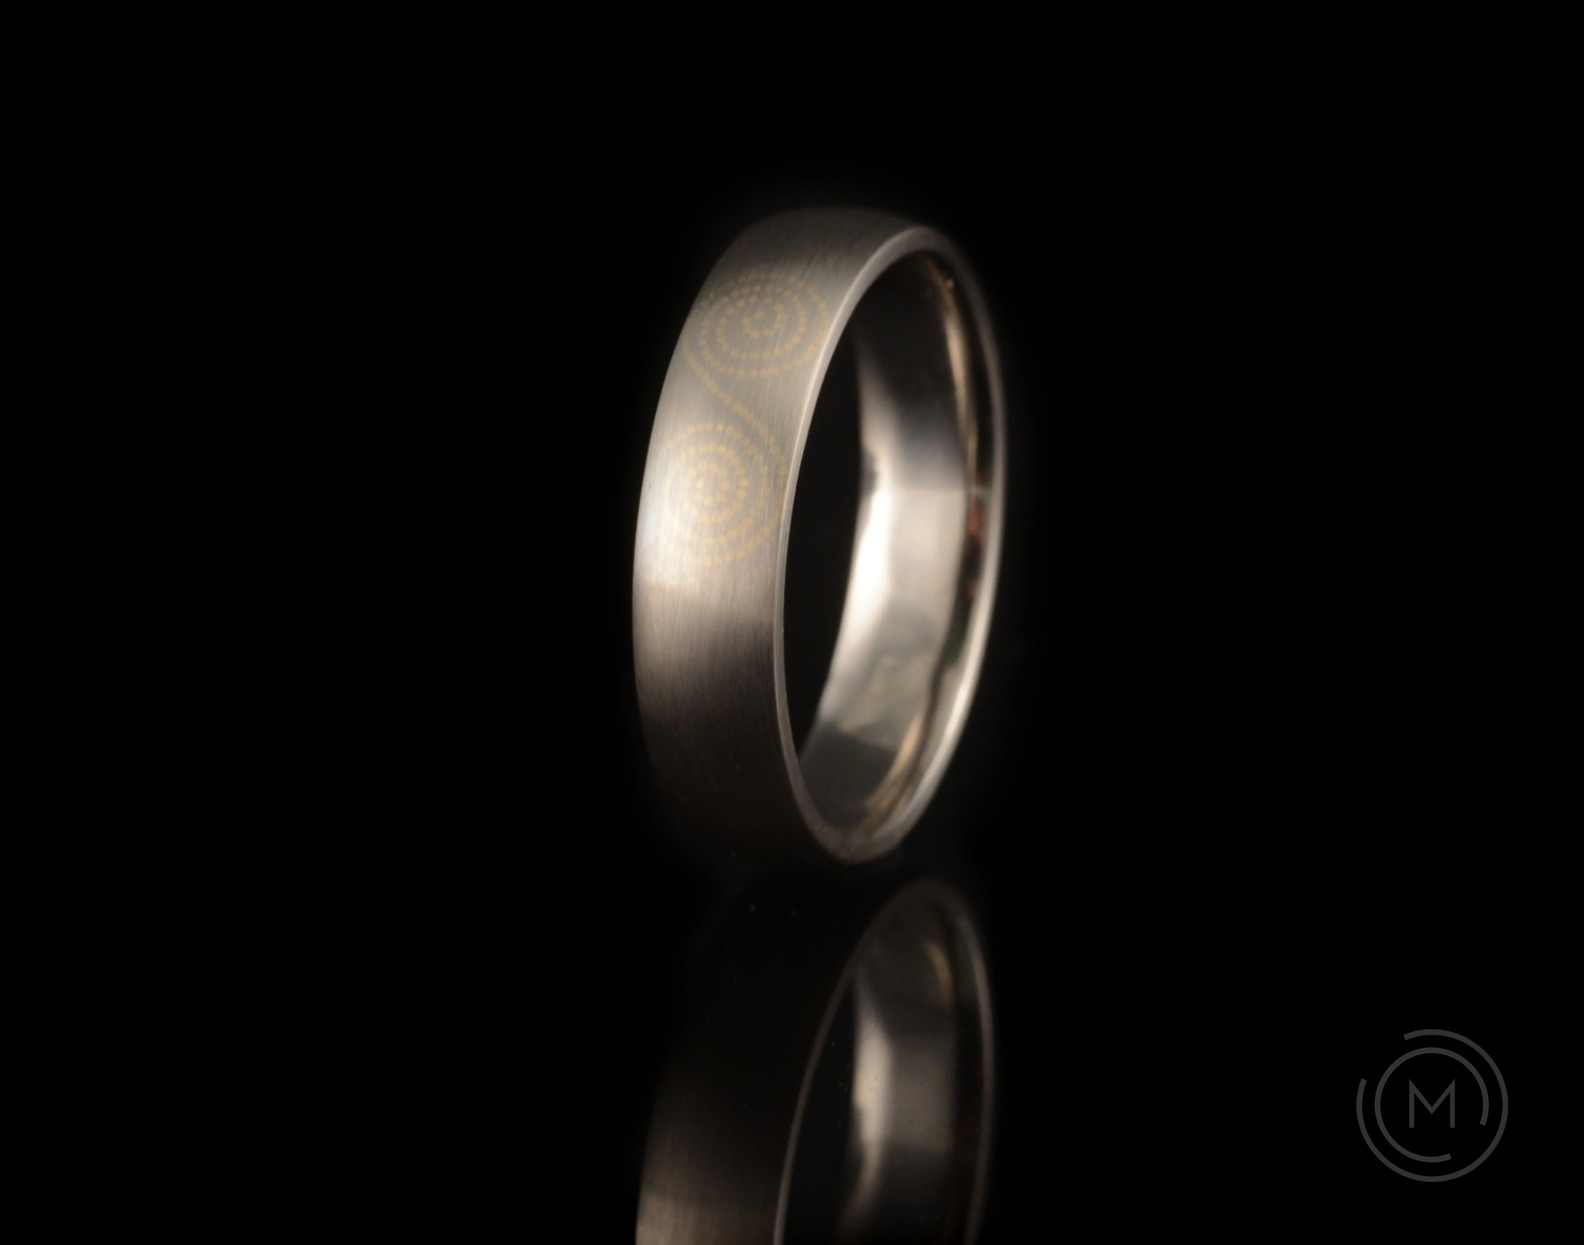 Bespoke Celtic inlaid mens wedding ring